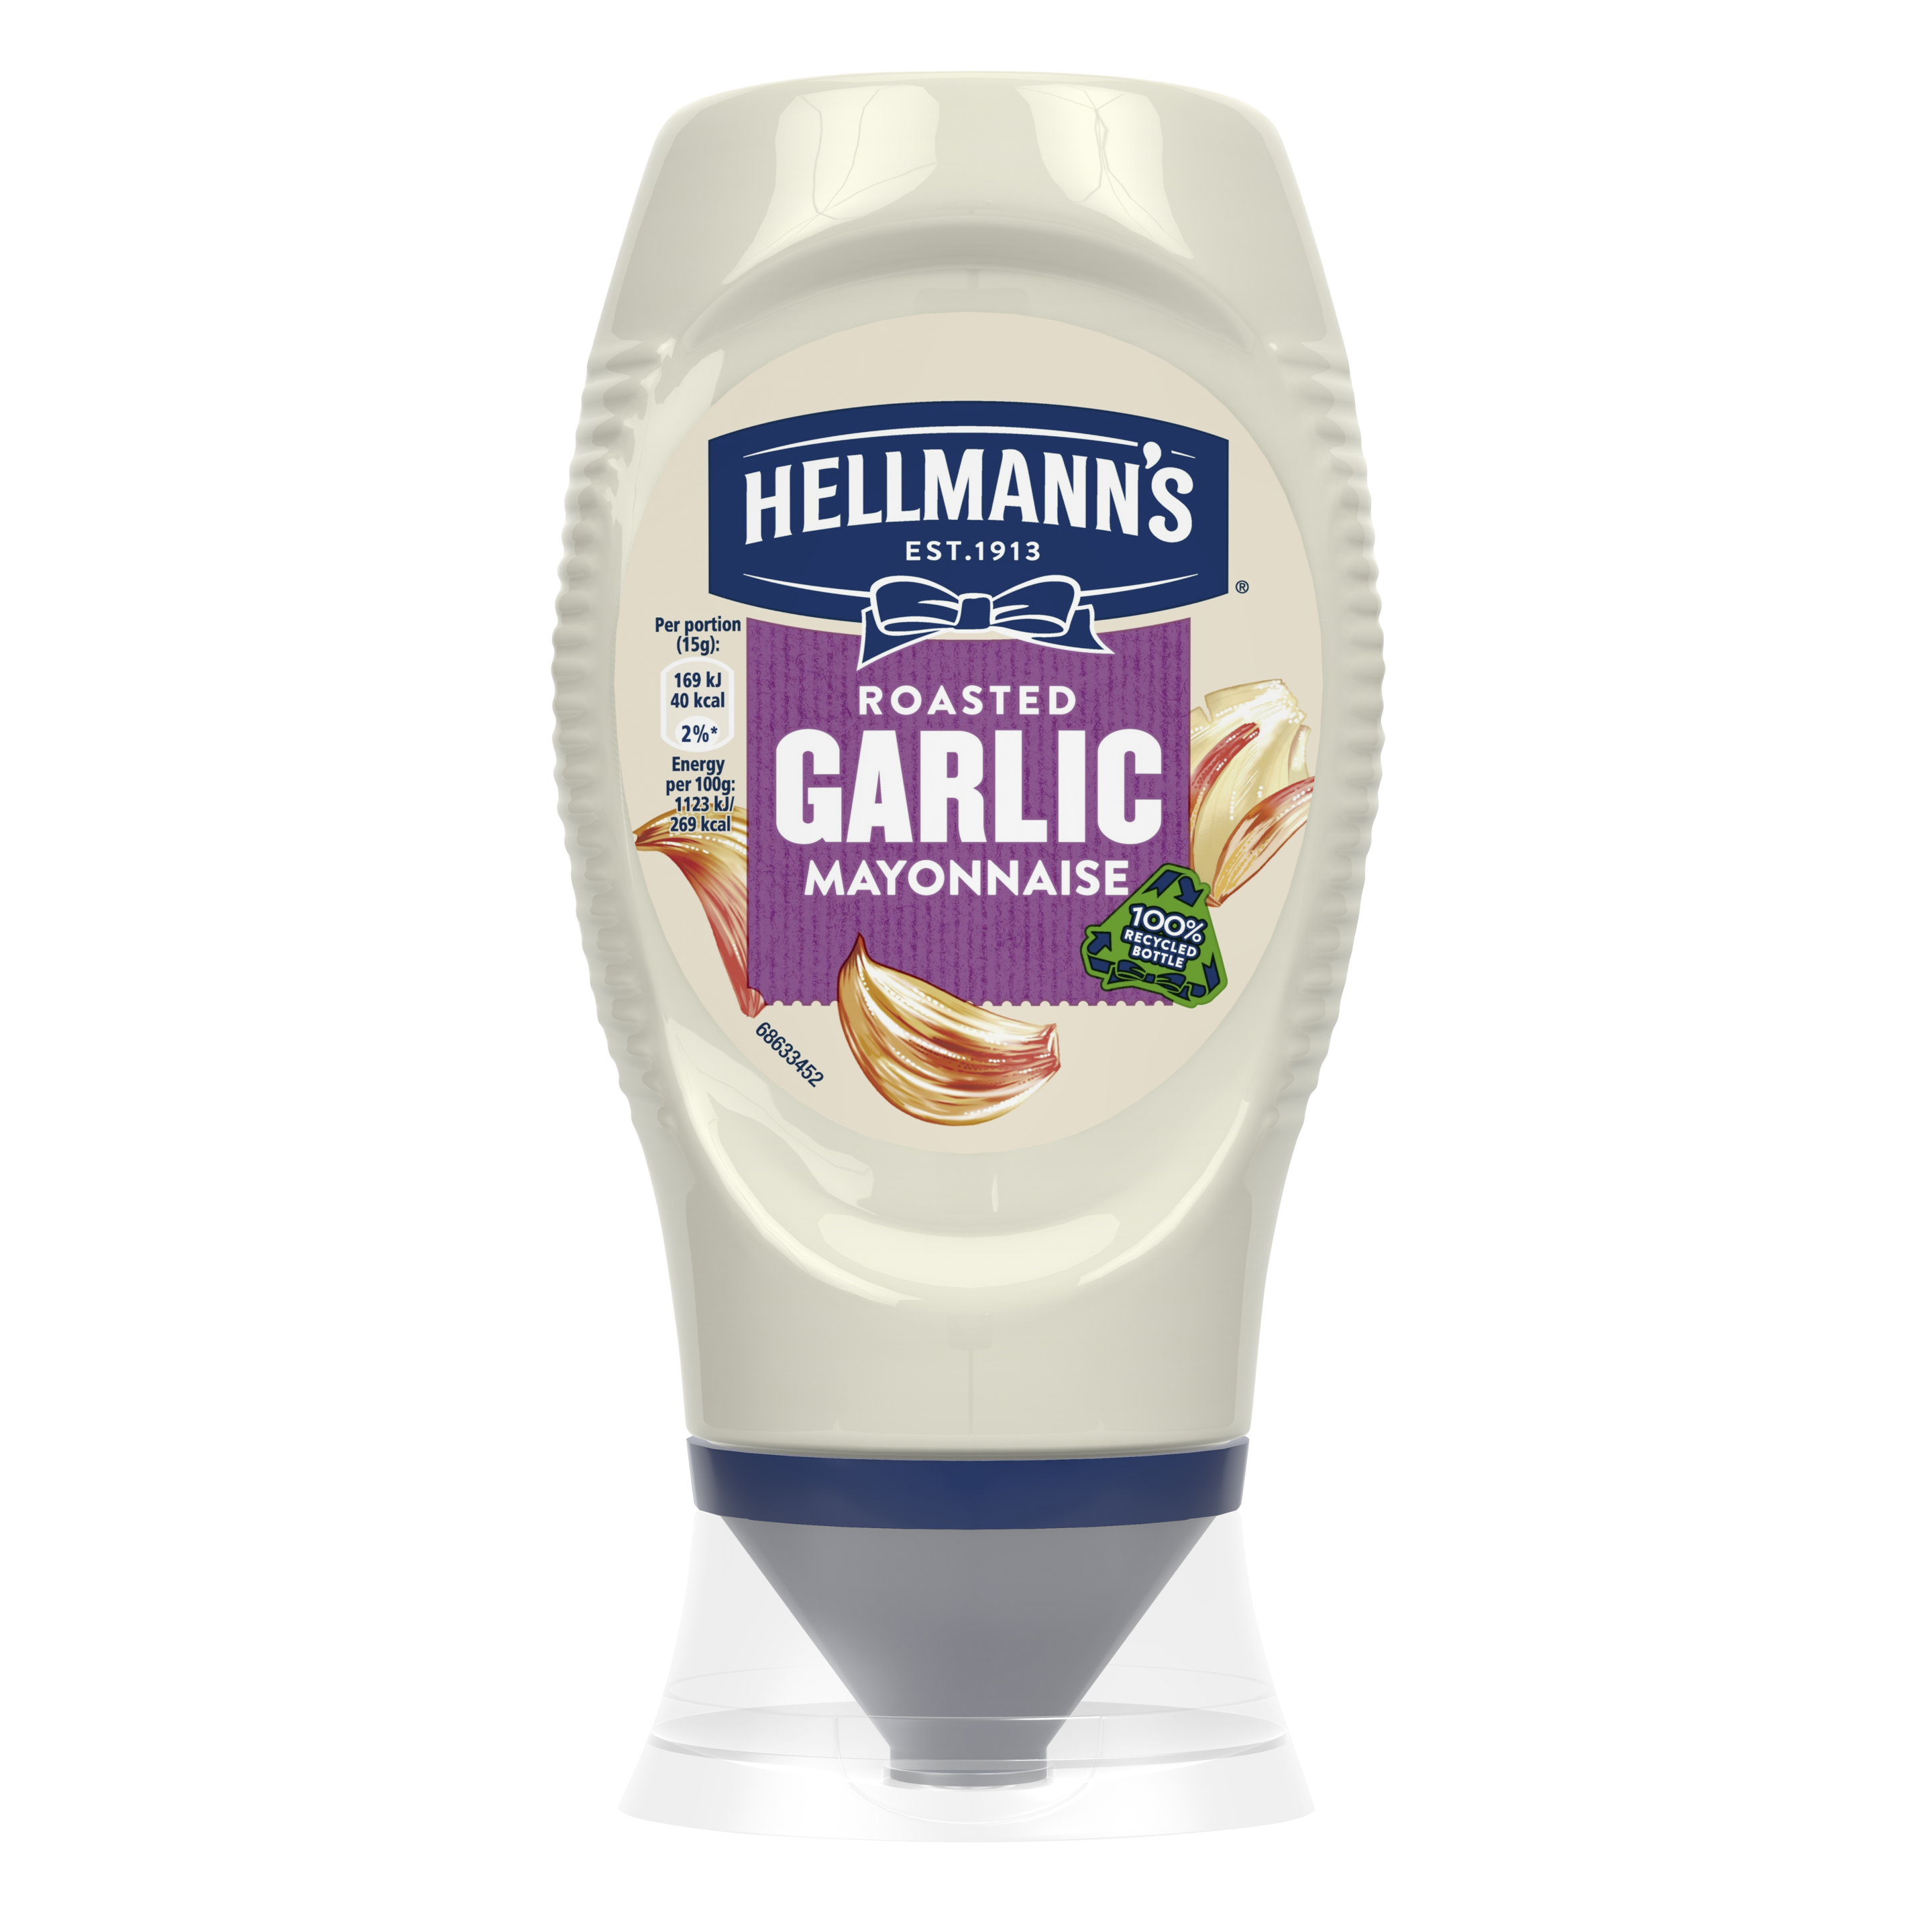 Hellmann's Garlic Mayonnaise